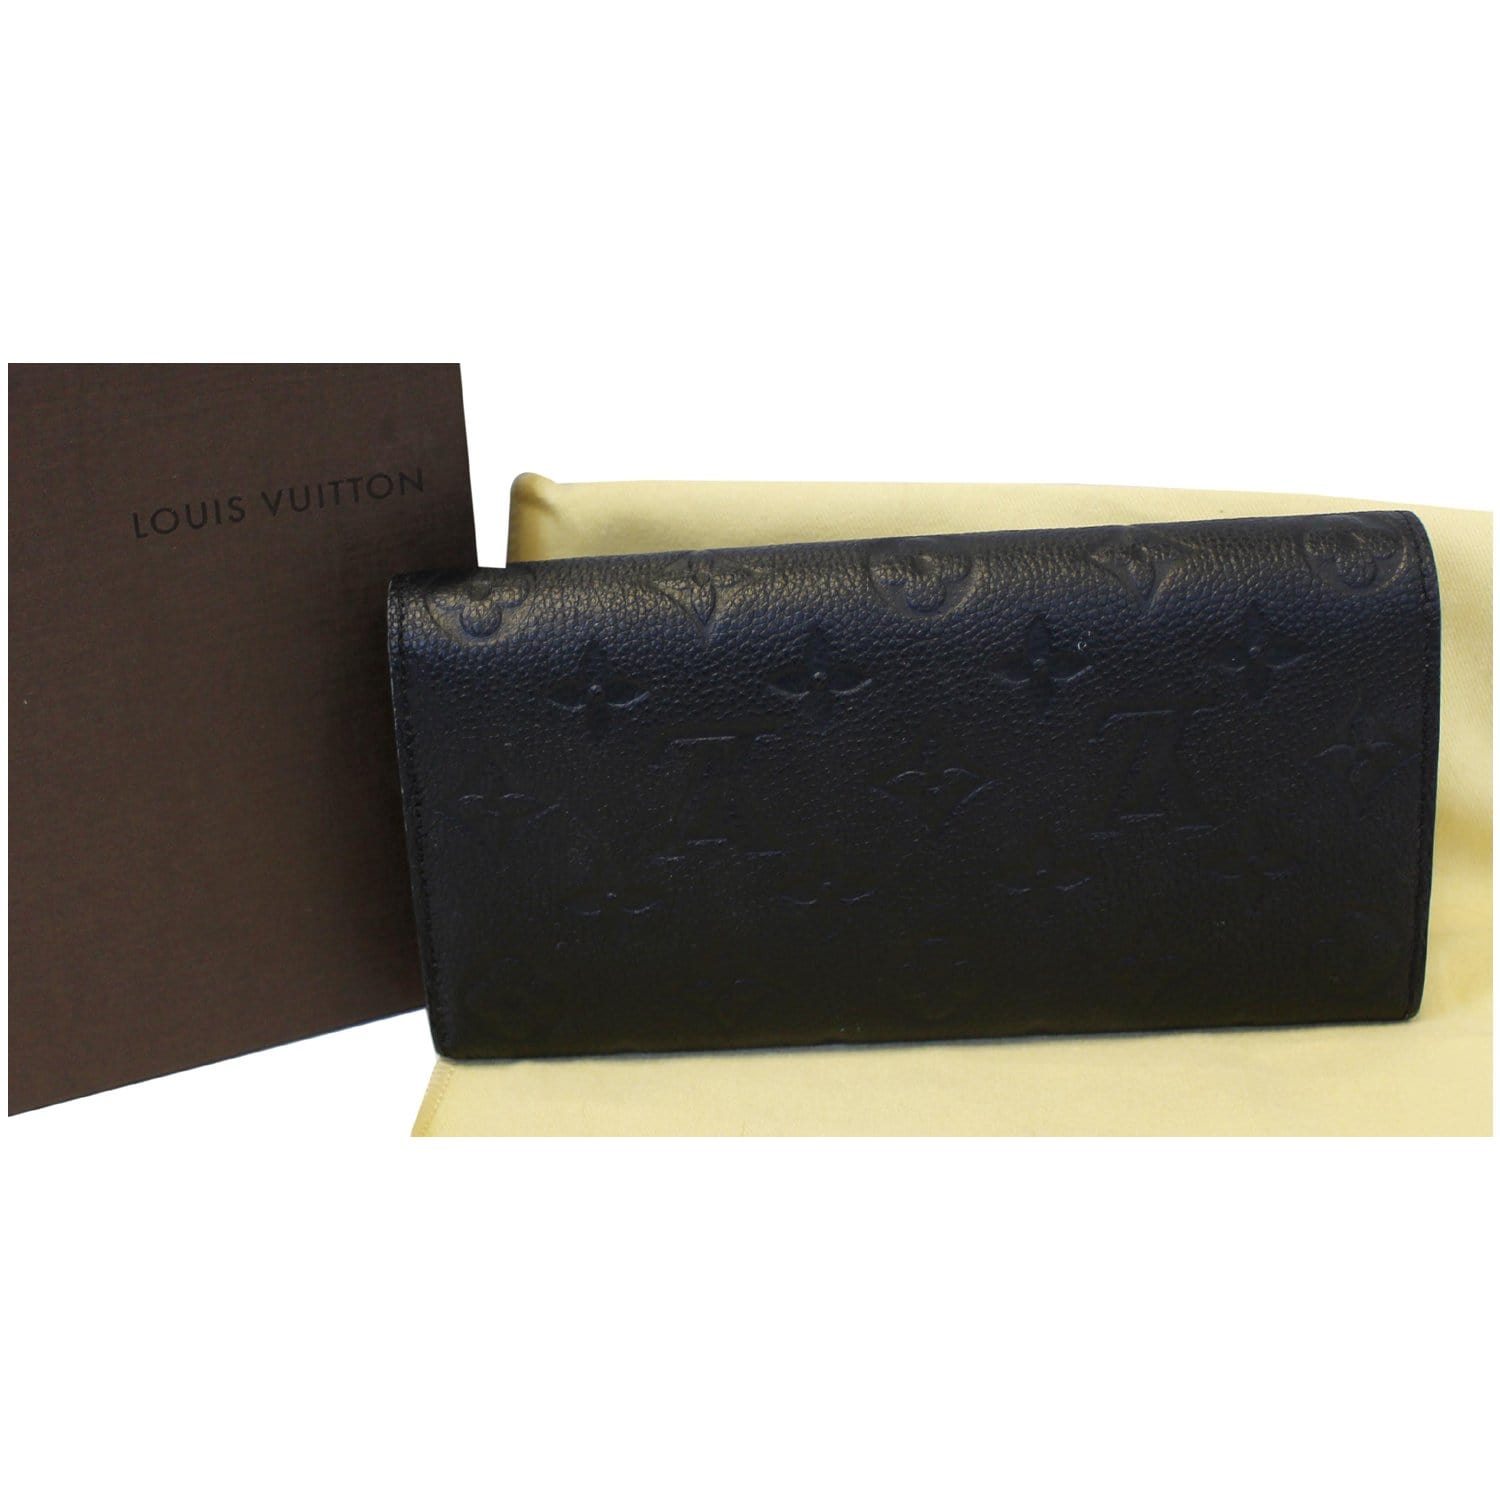 Louis Vuitton - Authenticated Emilie Wallet - Leather Black for Women, Never Worn